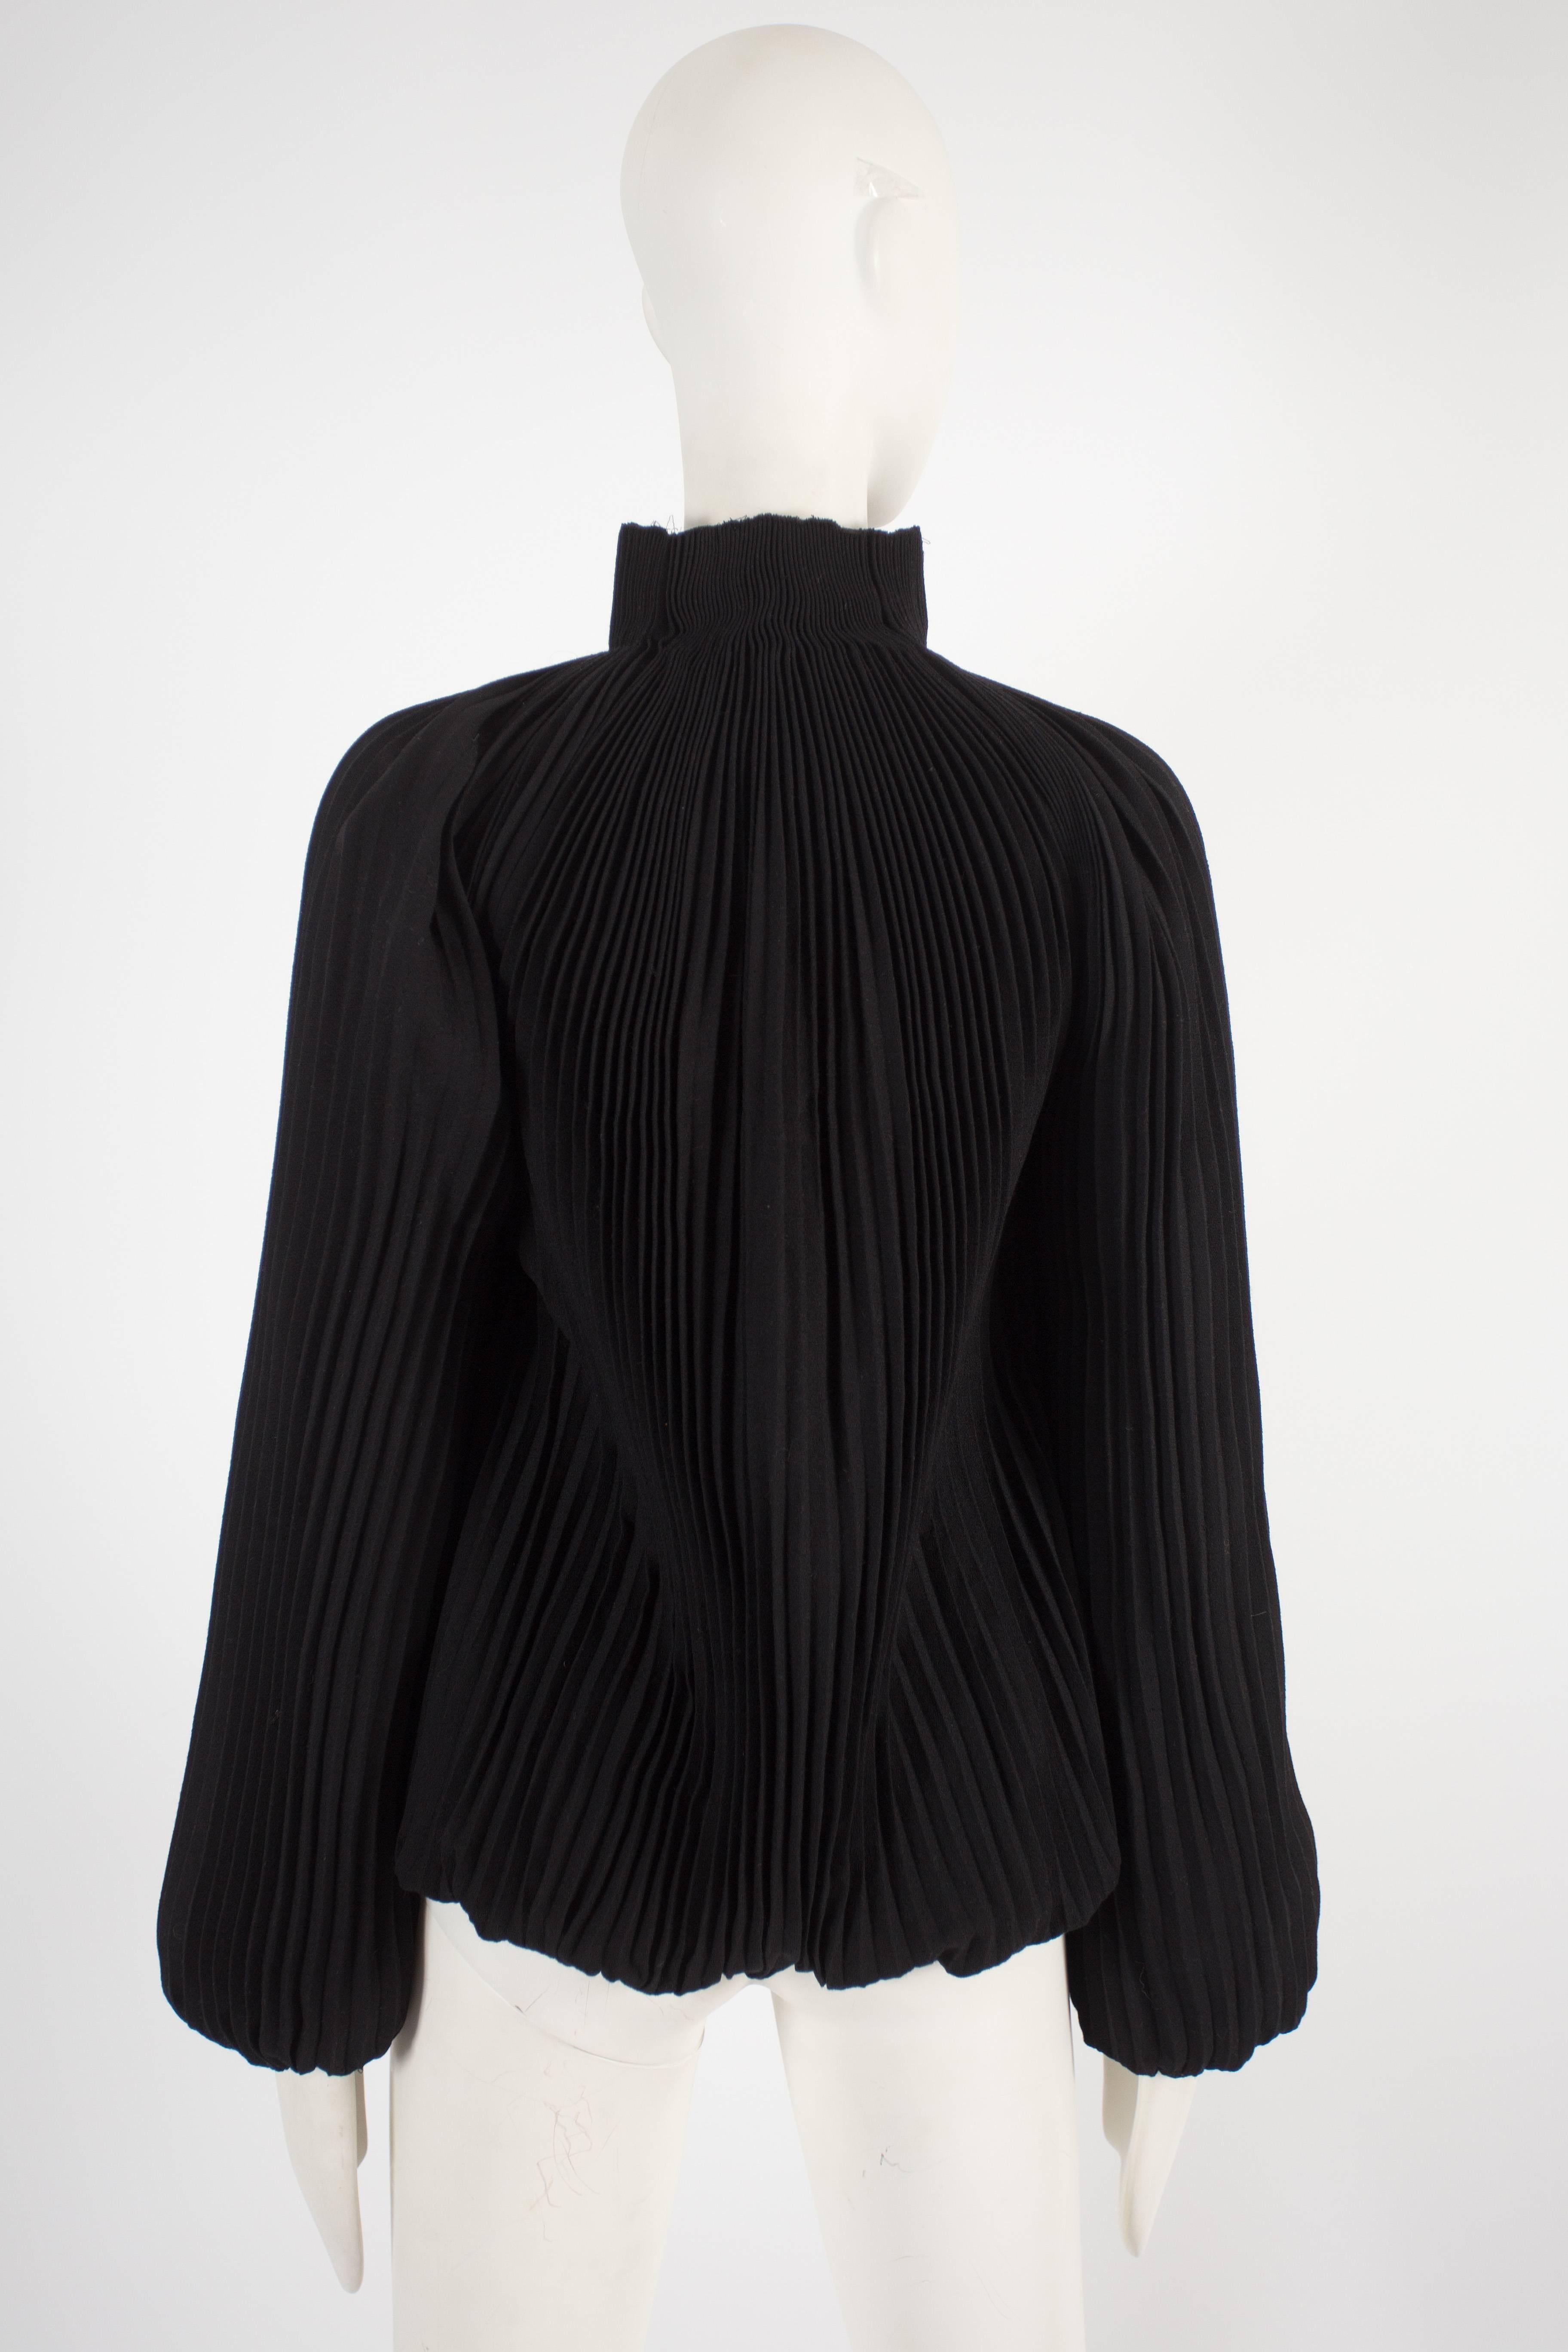 Alexander McQueen black pleated wool jacket, fw 2004 For Sale 1